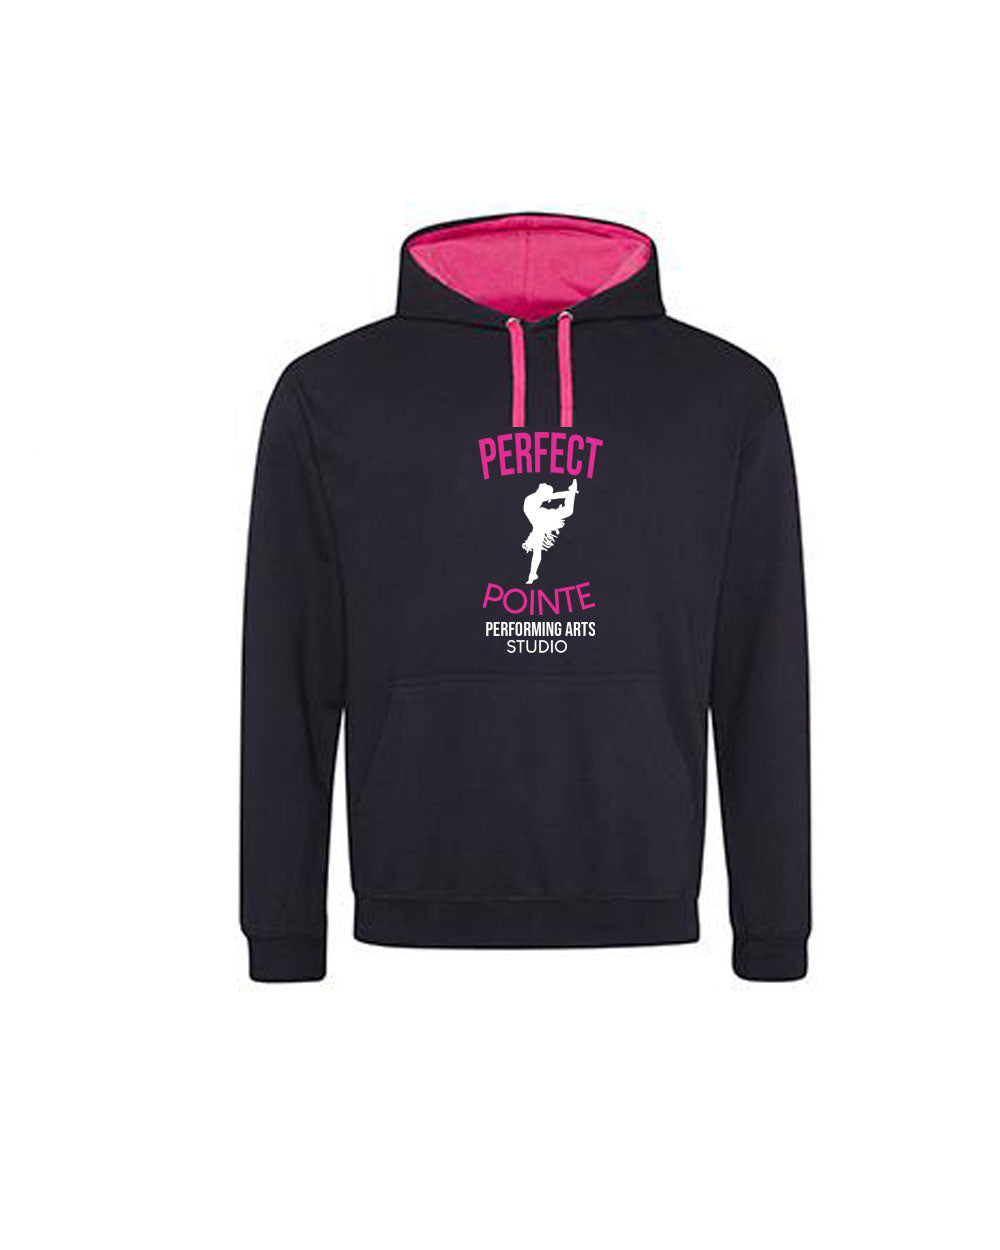 Perfect Pointe Design 8 Hooded Sweatshirt, pink